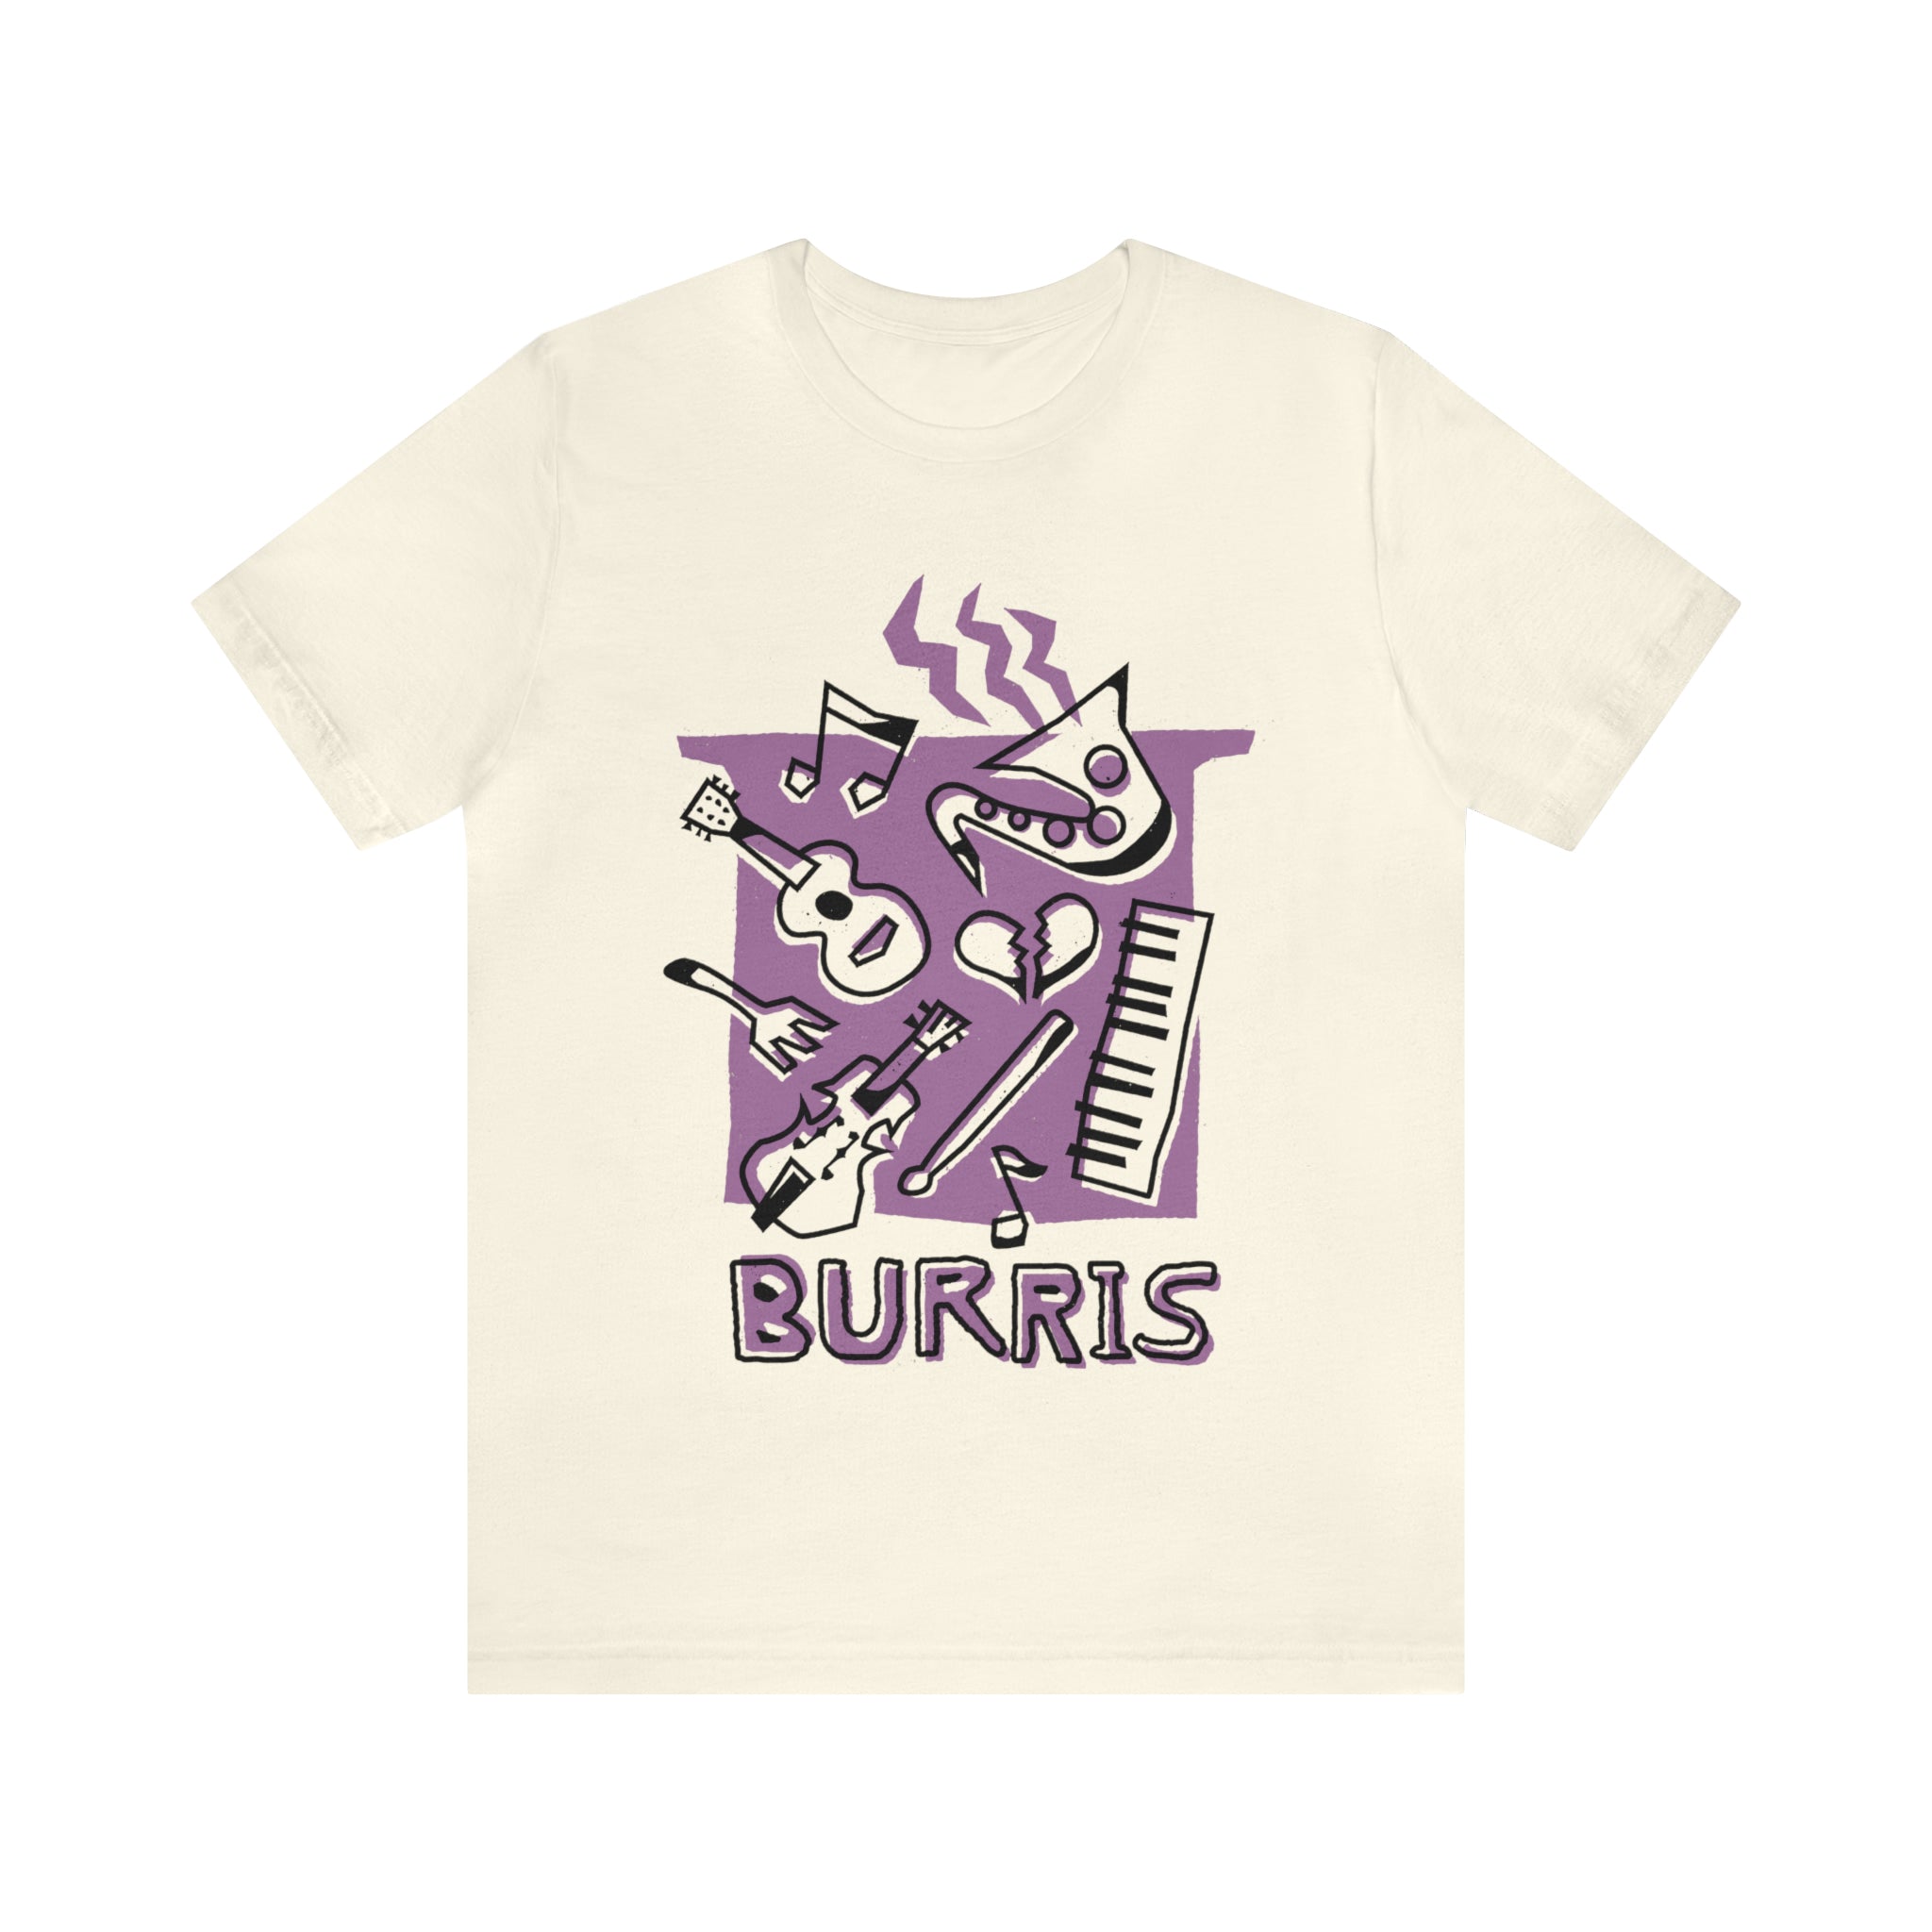 Burris - Dirty Coast Press